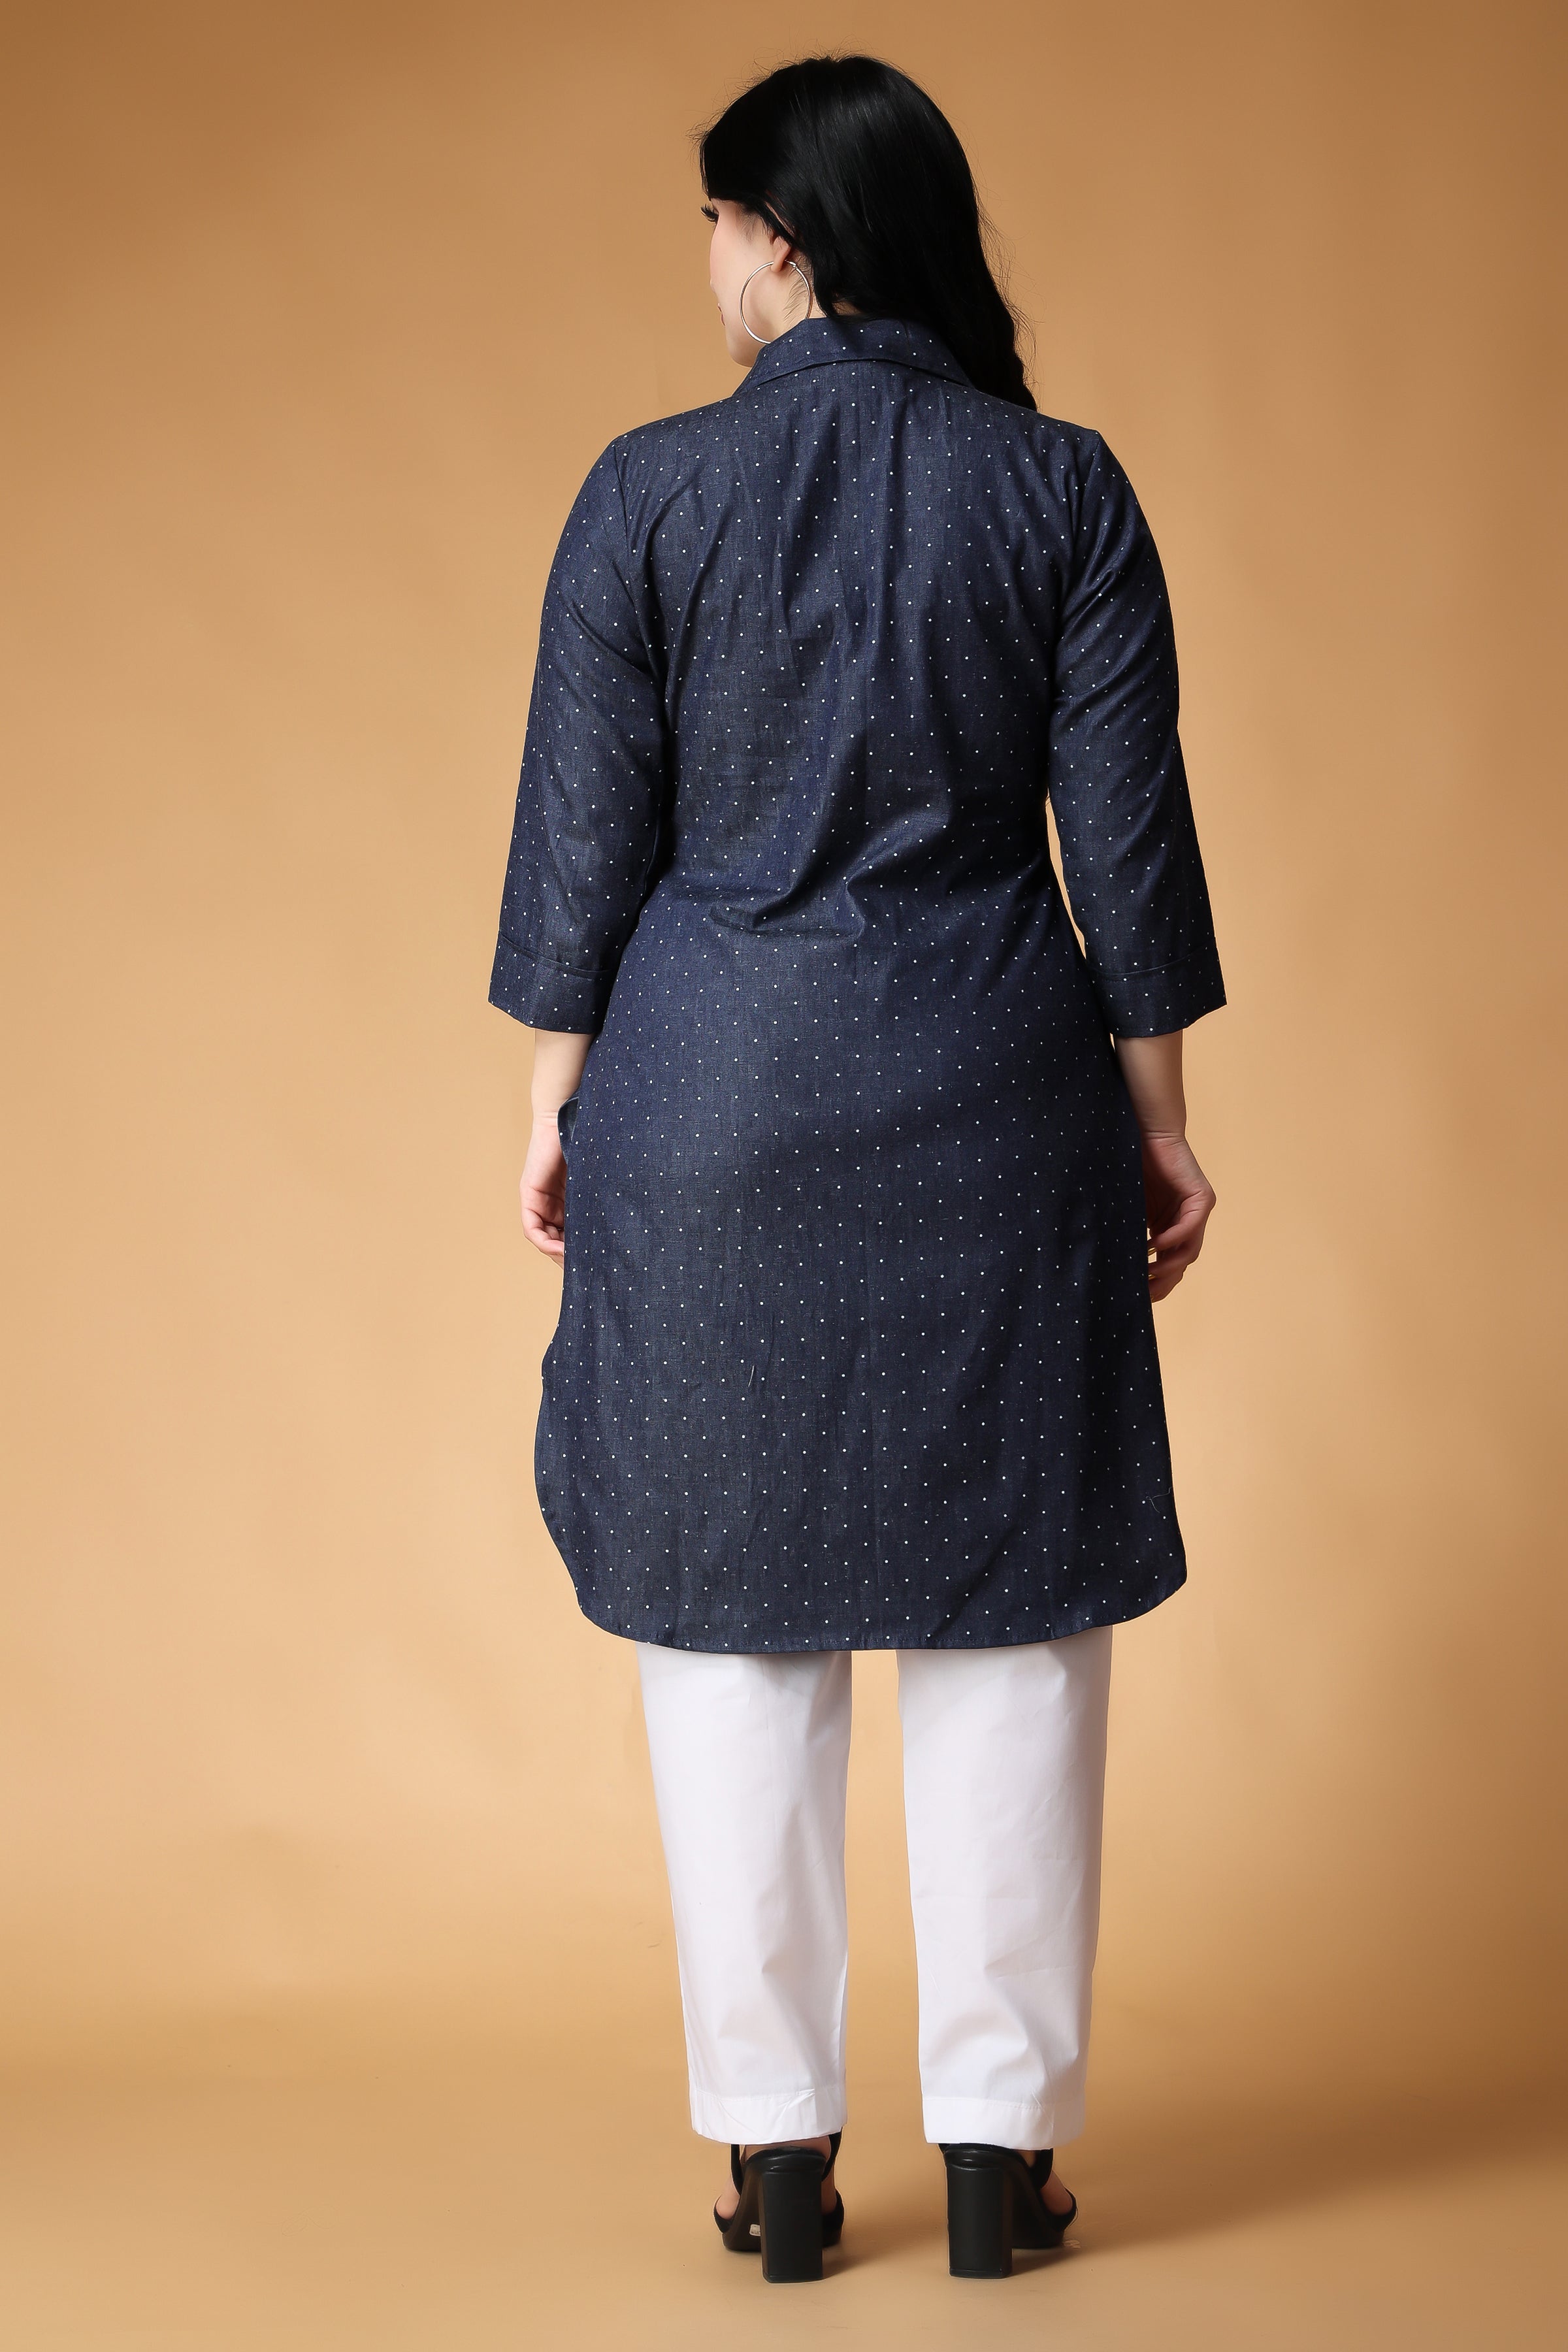 Buy Plus Size Short Kurta & Modern Short Kurti Designs - Apella